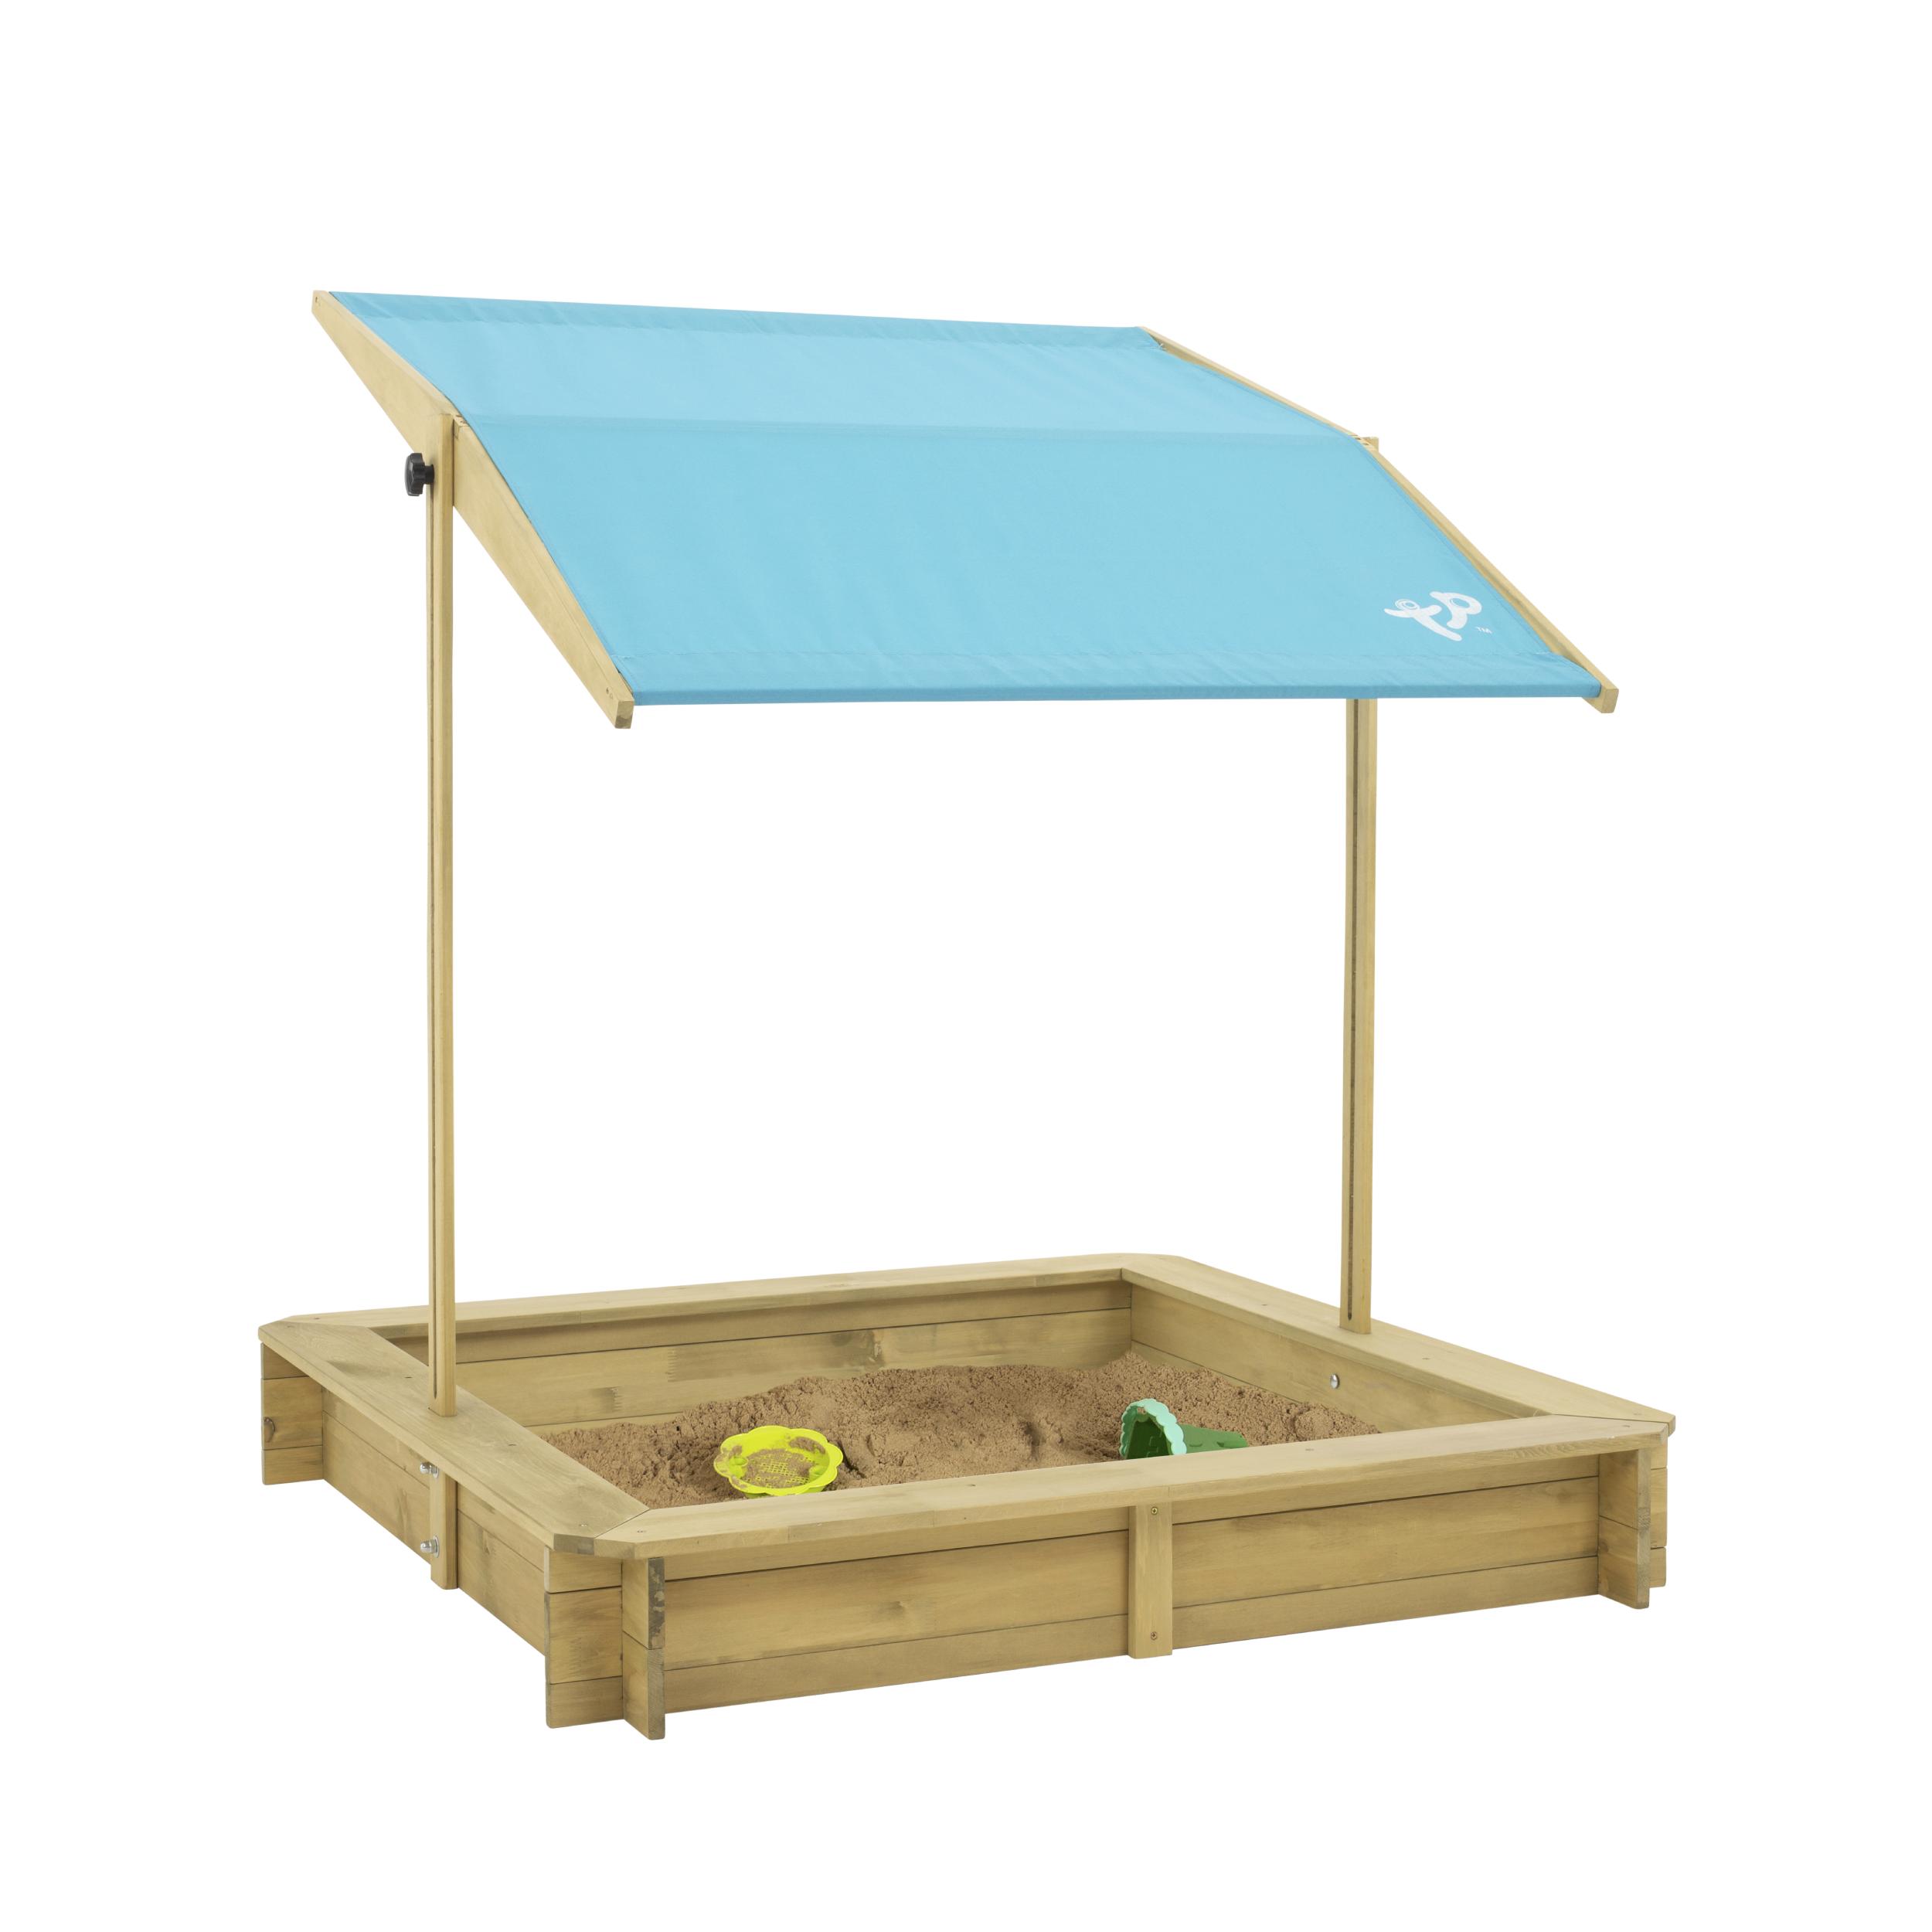 TP Toys Sandkasten mit Sonnendach, Holz